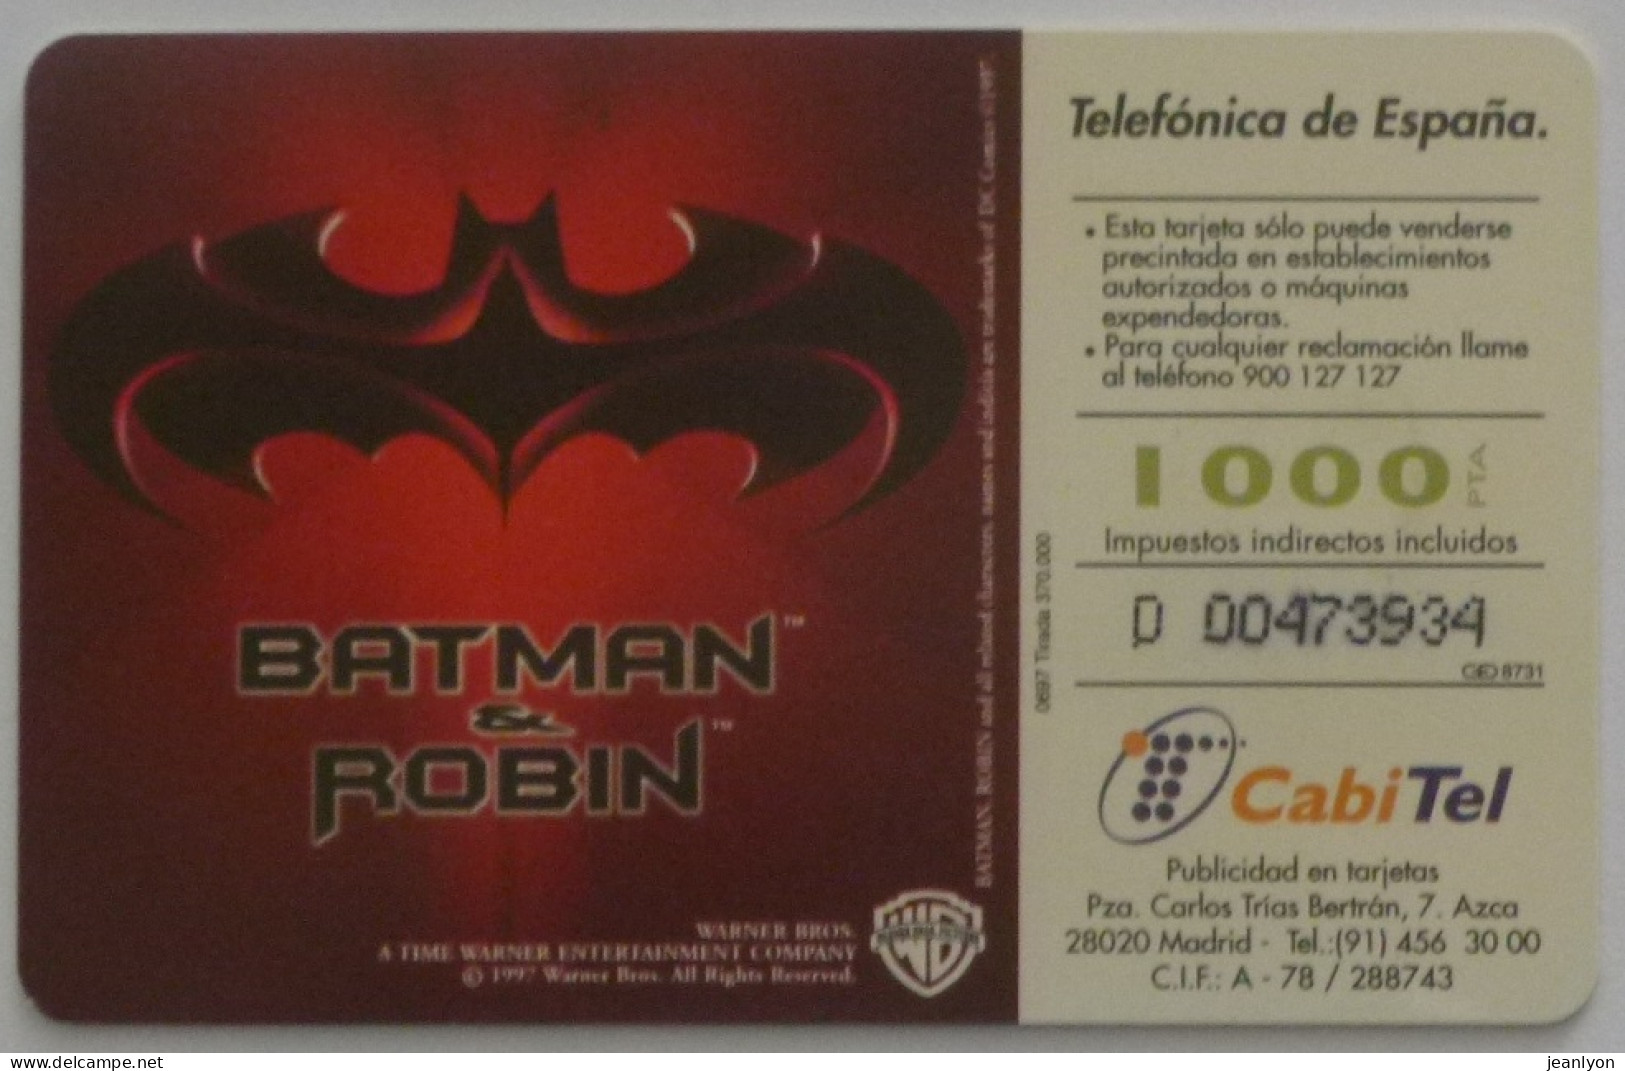 CINEMA - BATMAN ET ROBIN - Film Warner Bros - Carte Téléphone Espagne 1000 Utilisée - Cinéma